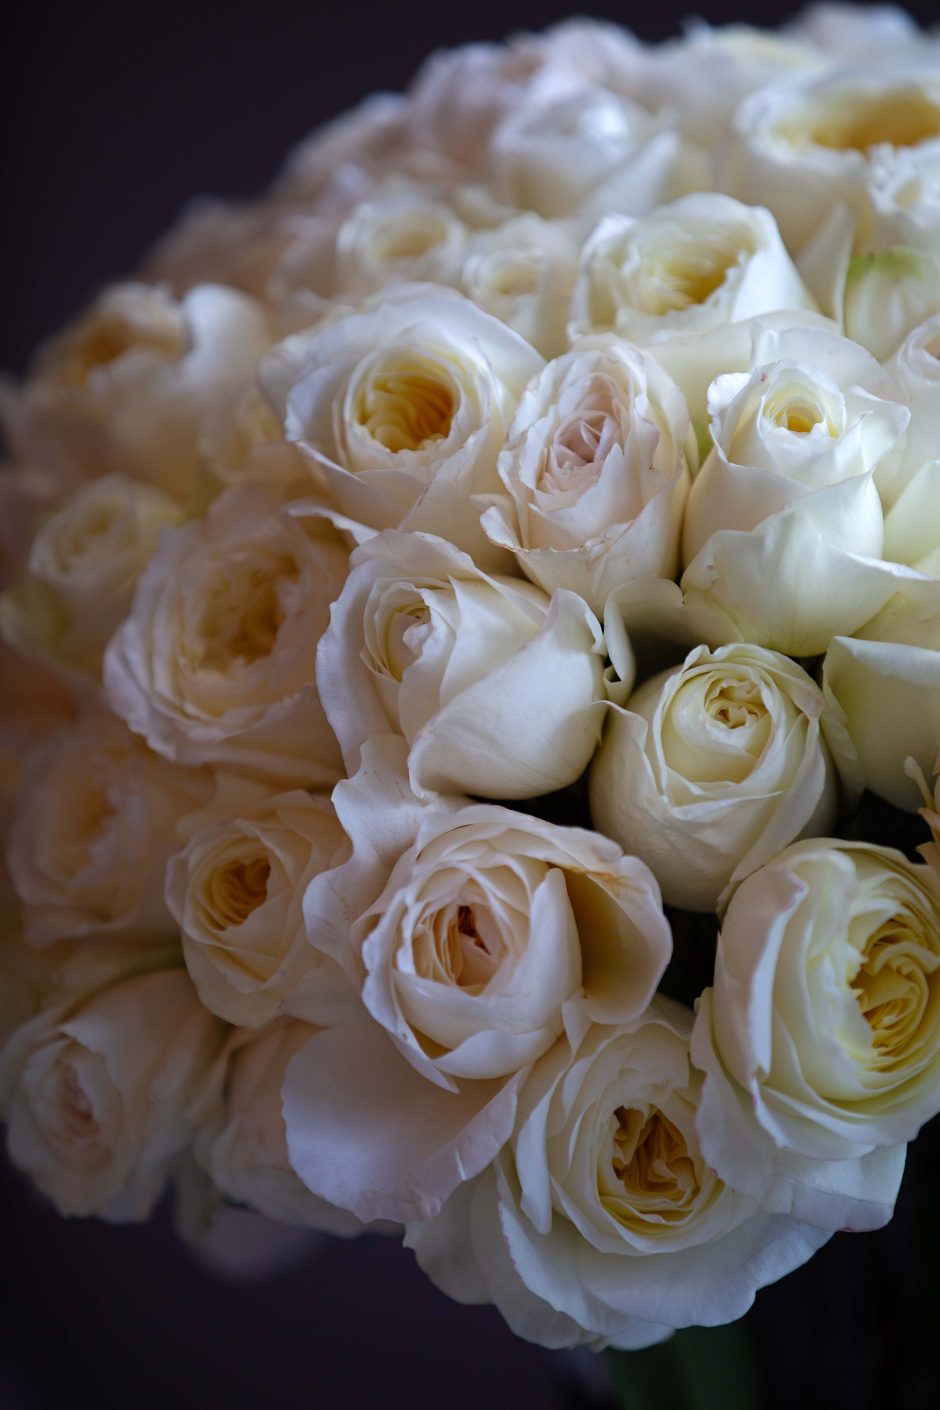 100 White Roses Bouquet, Viennese Waltz - 100 Premium garden Roses of David Austen Media 1 of 3